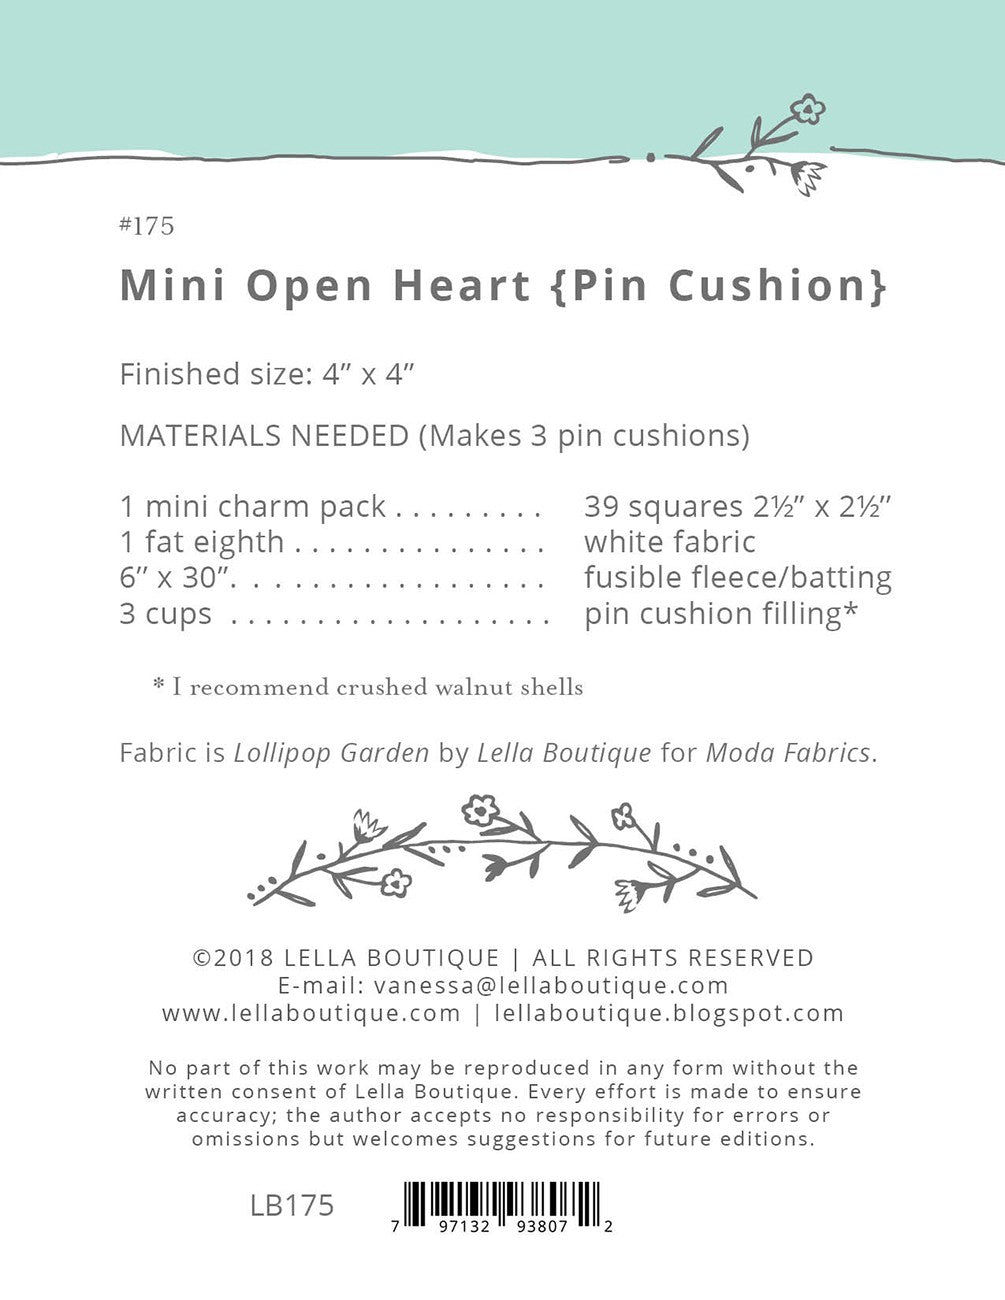 Mini Open Heart Pin Cushion